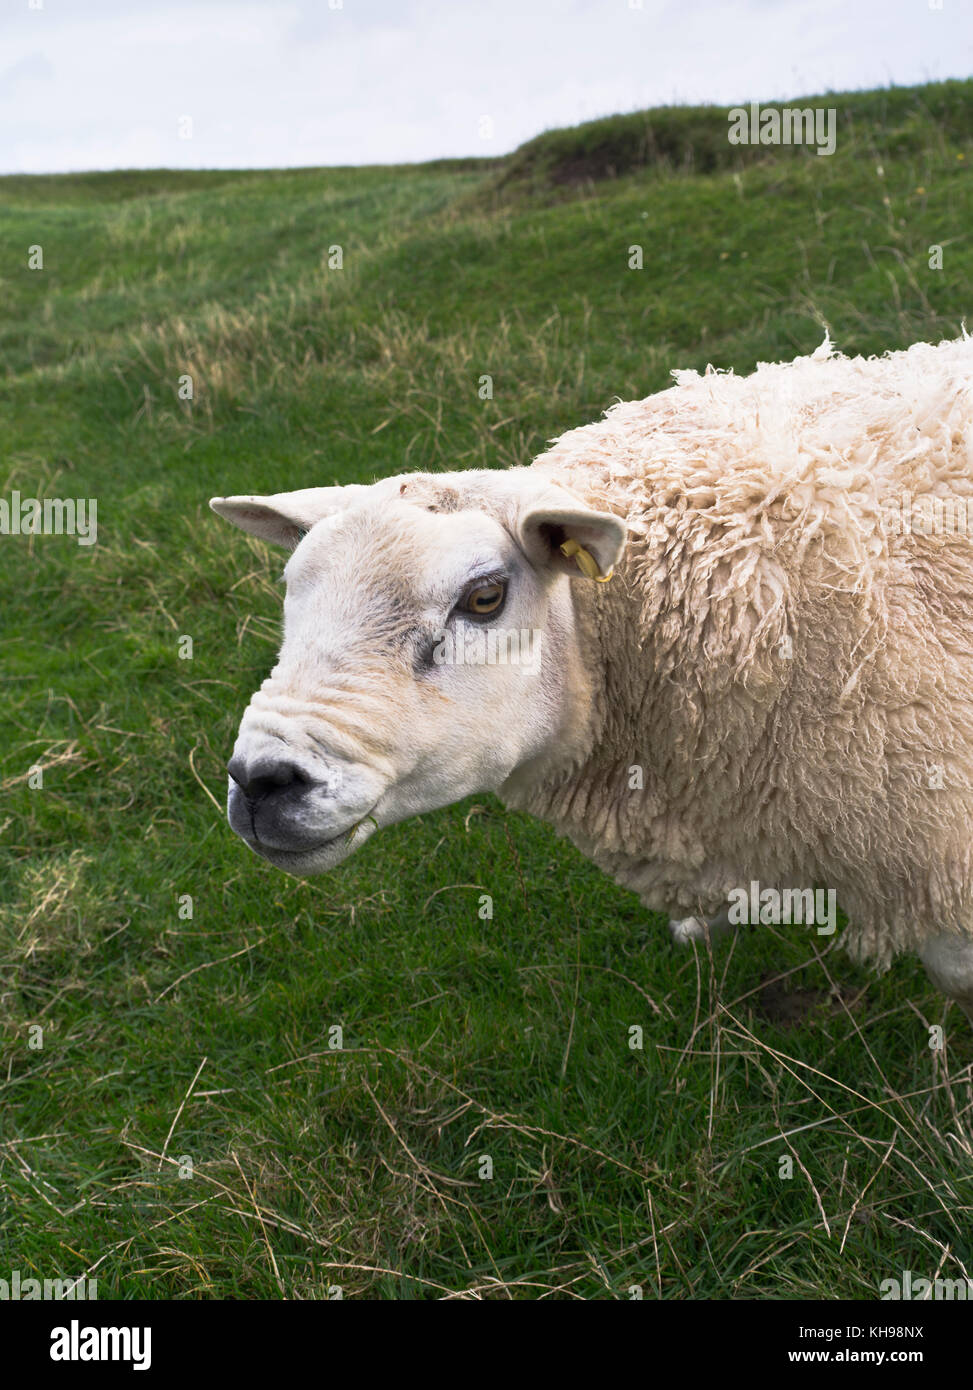 dh Texel Ram SHEEP UK Ram grass field livestock scotland Stock Photo